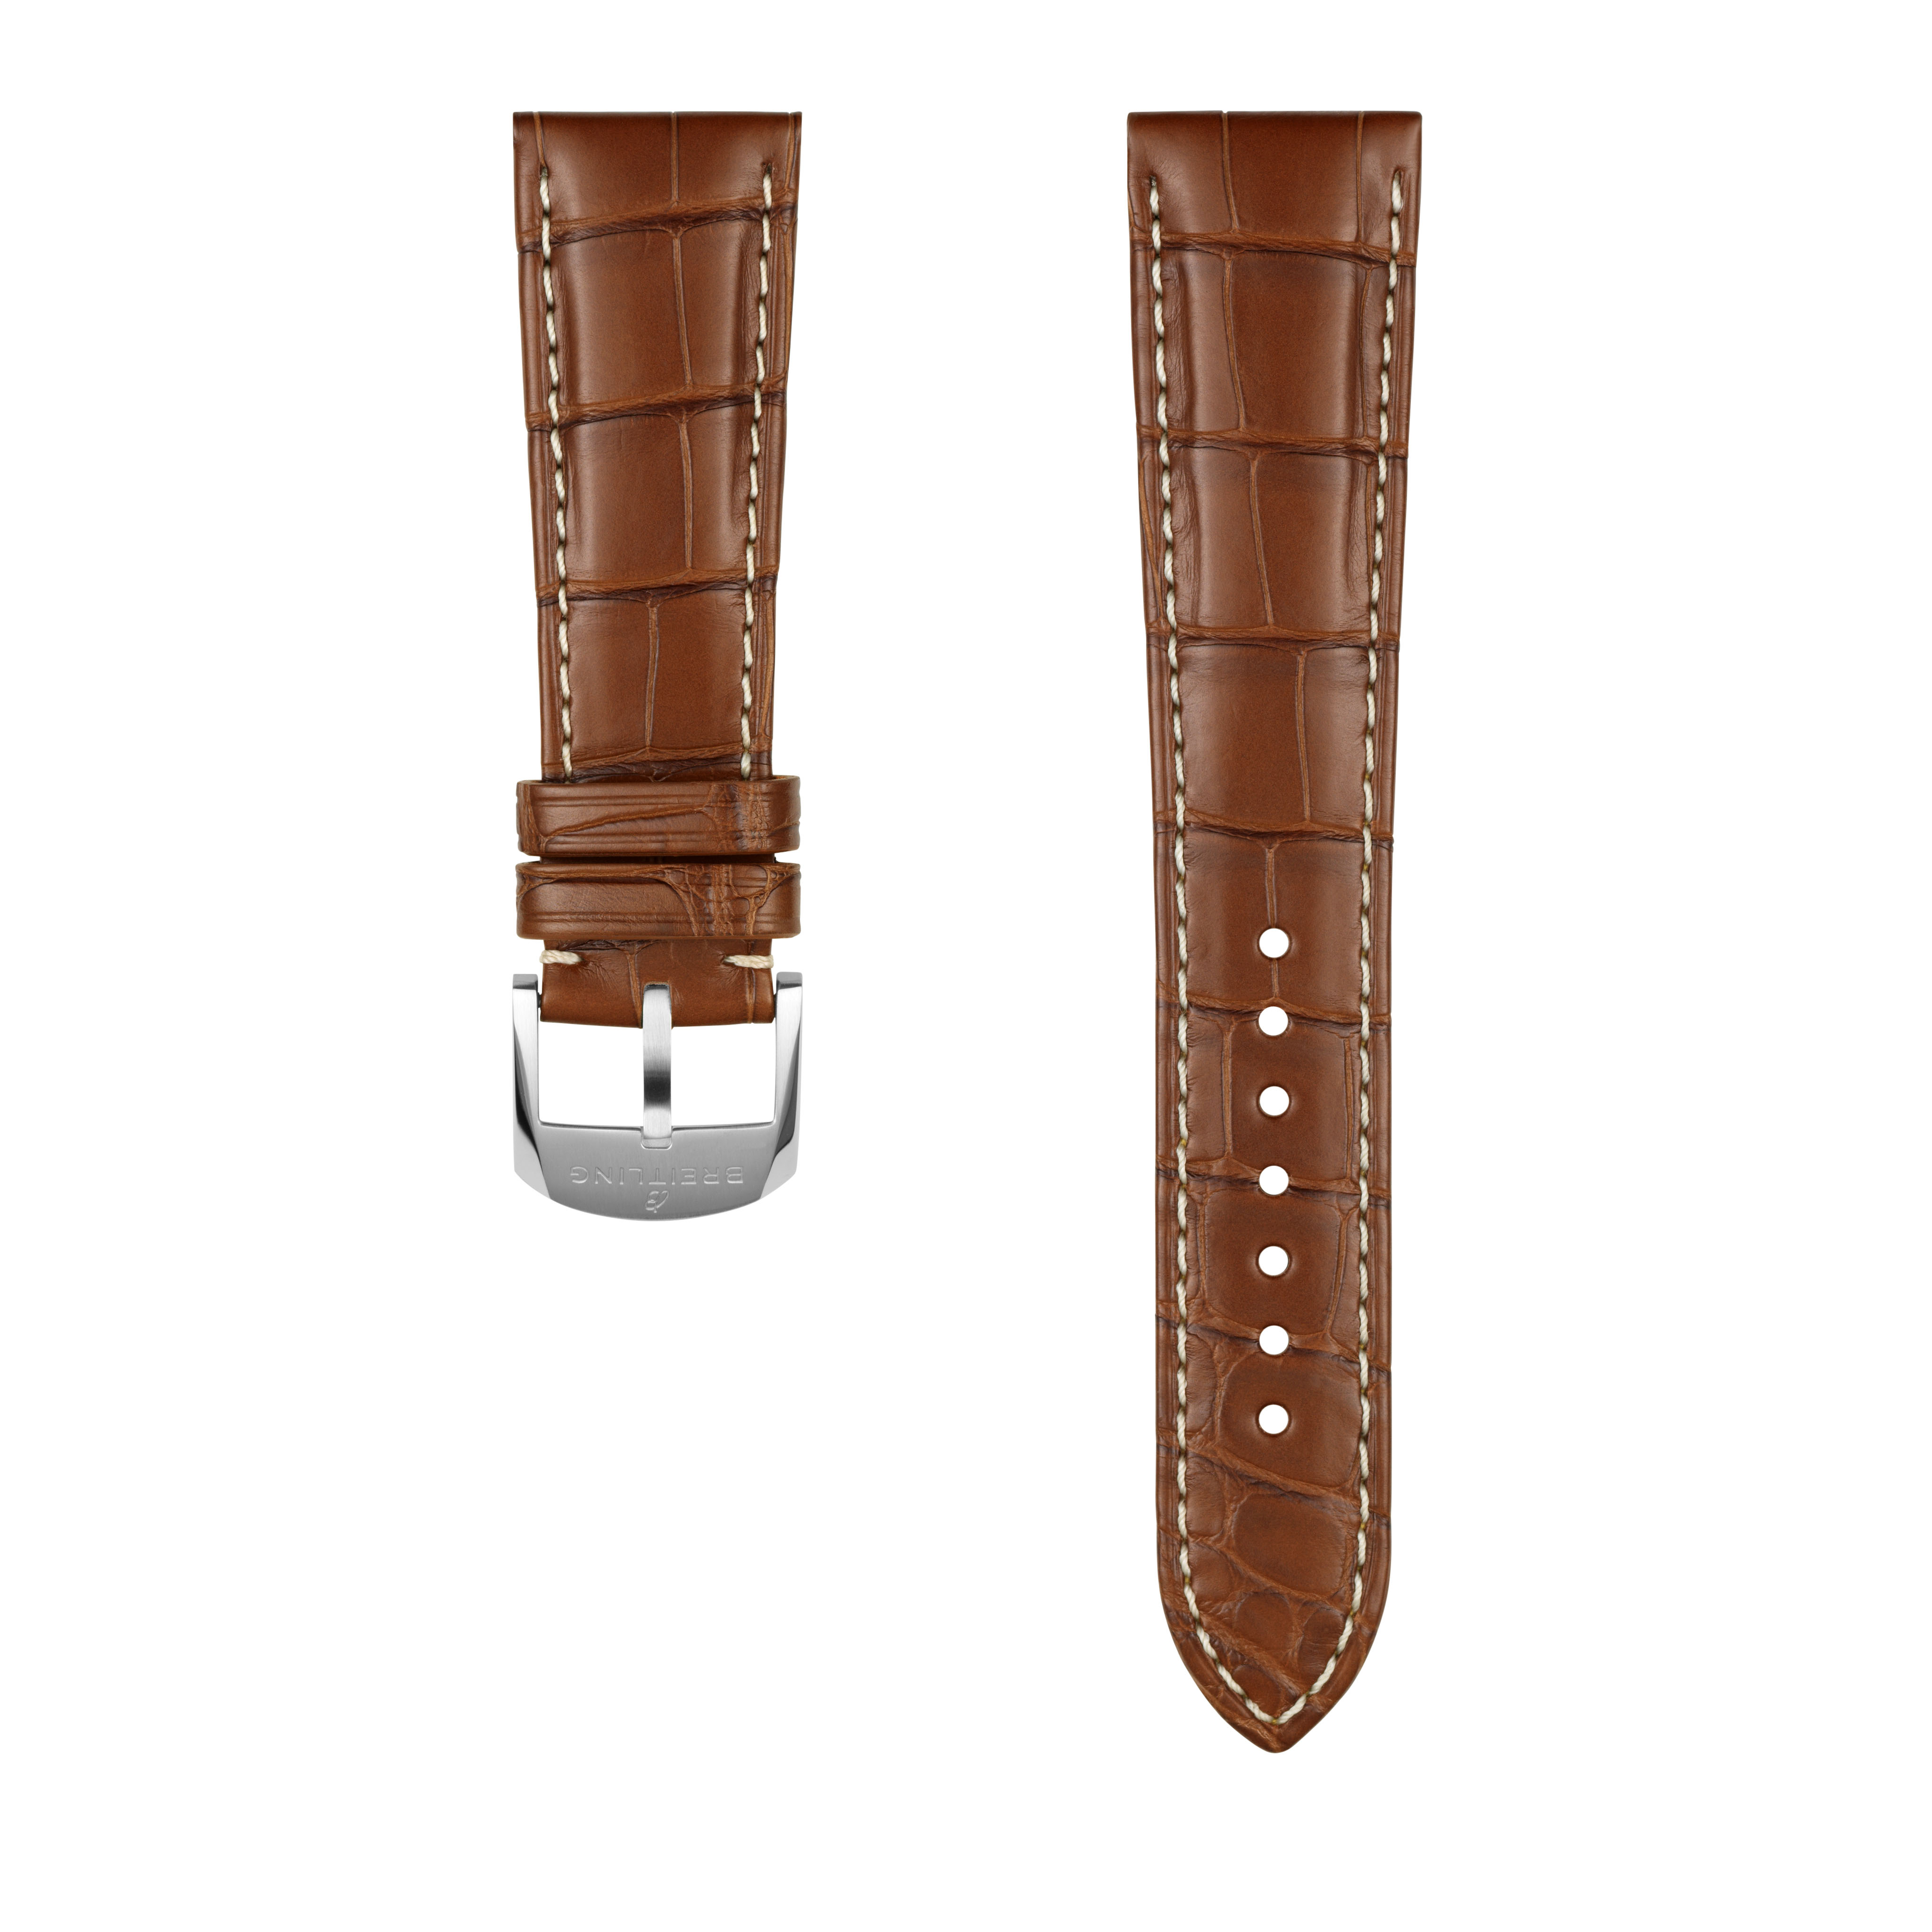 Gold brown alligator leather strap - 22 mm